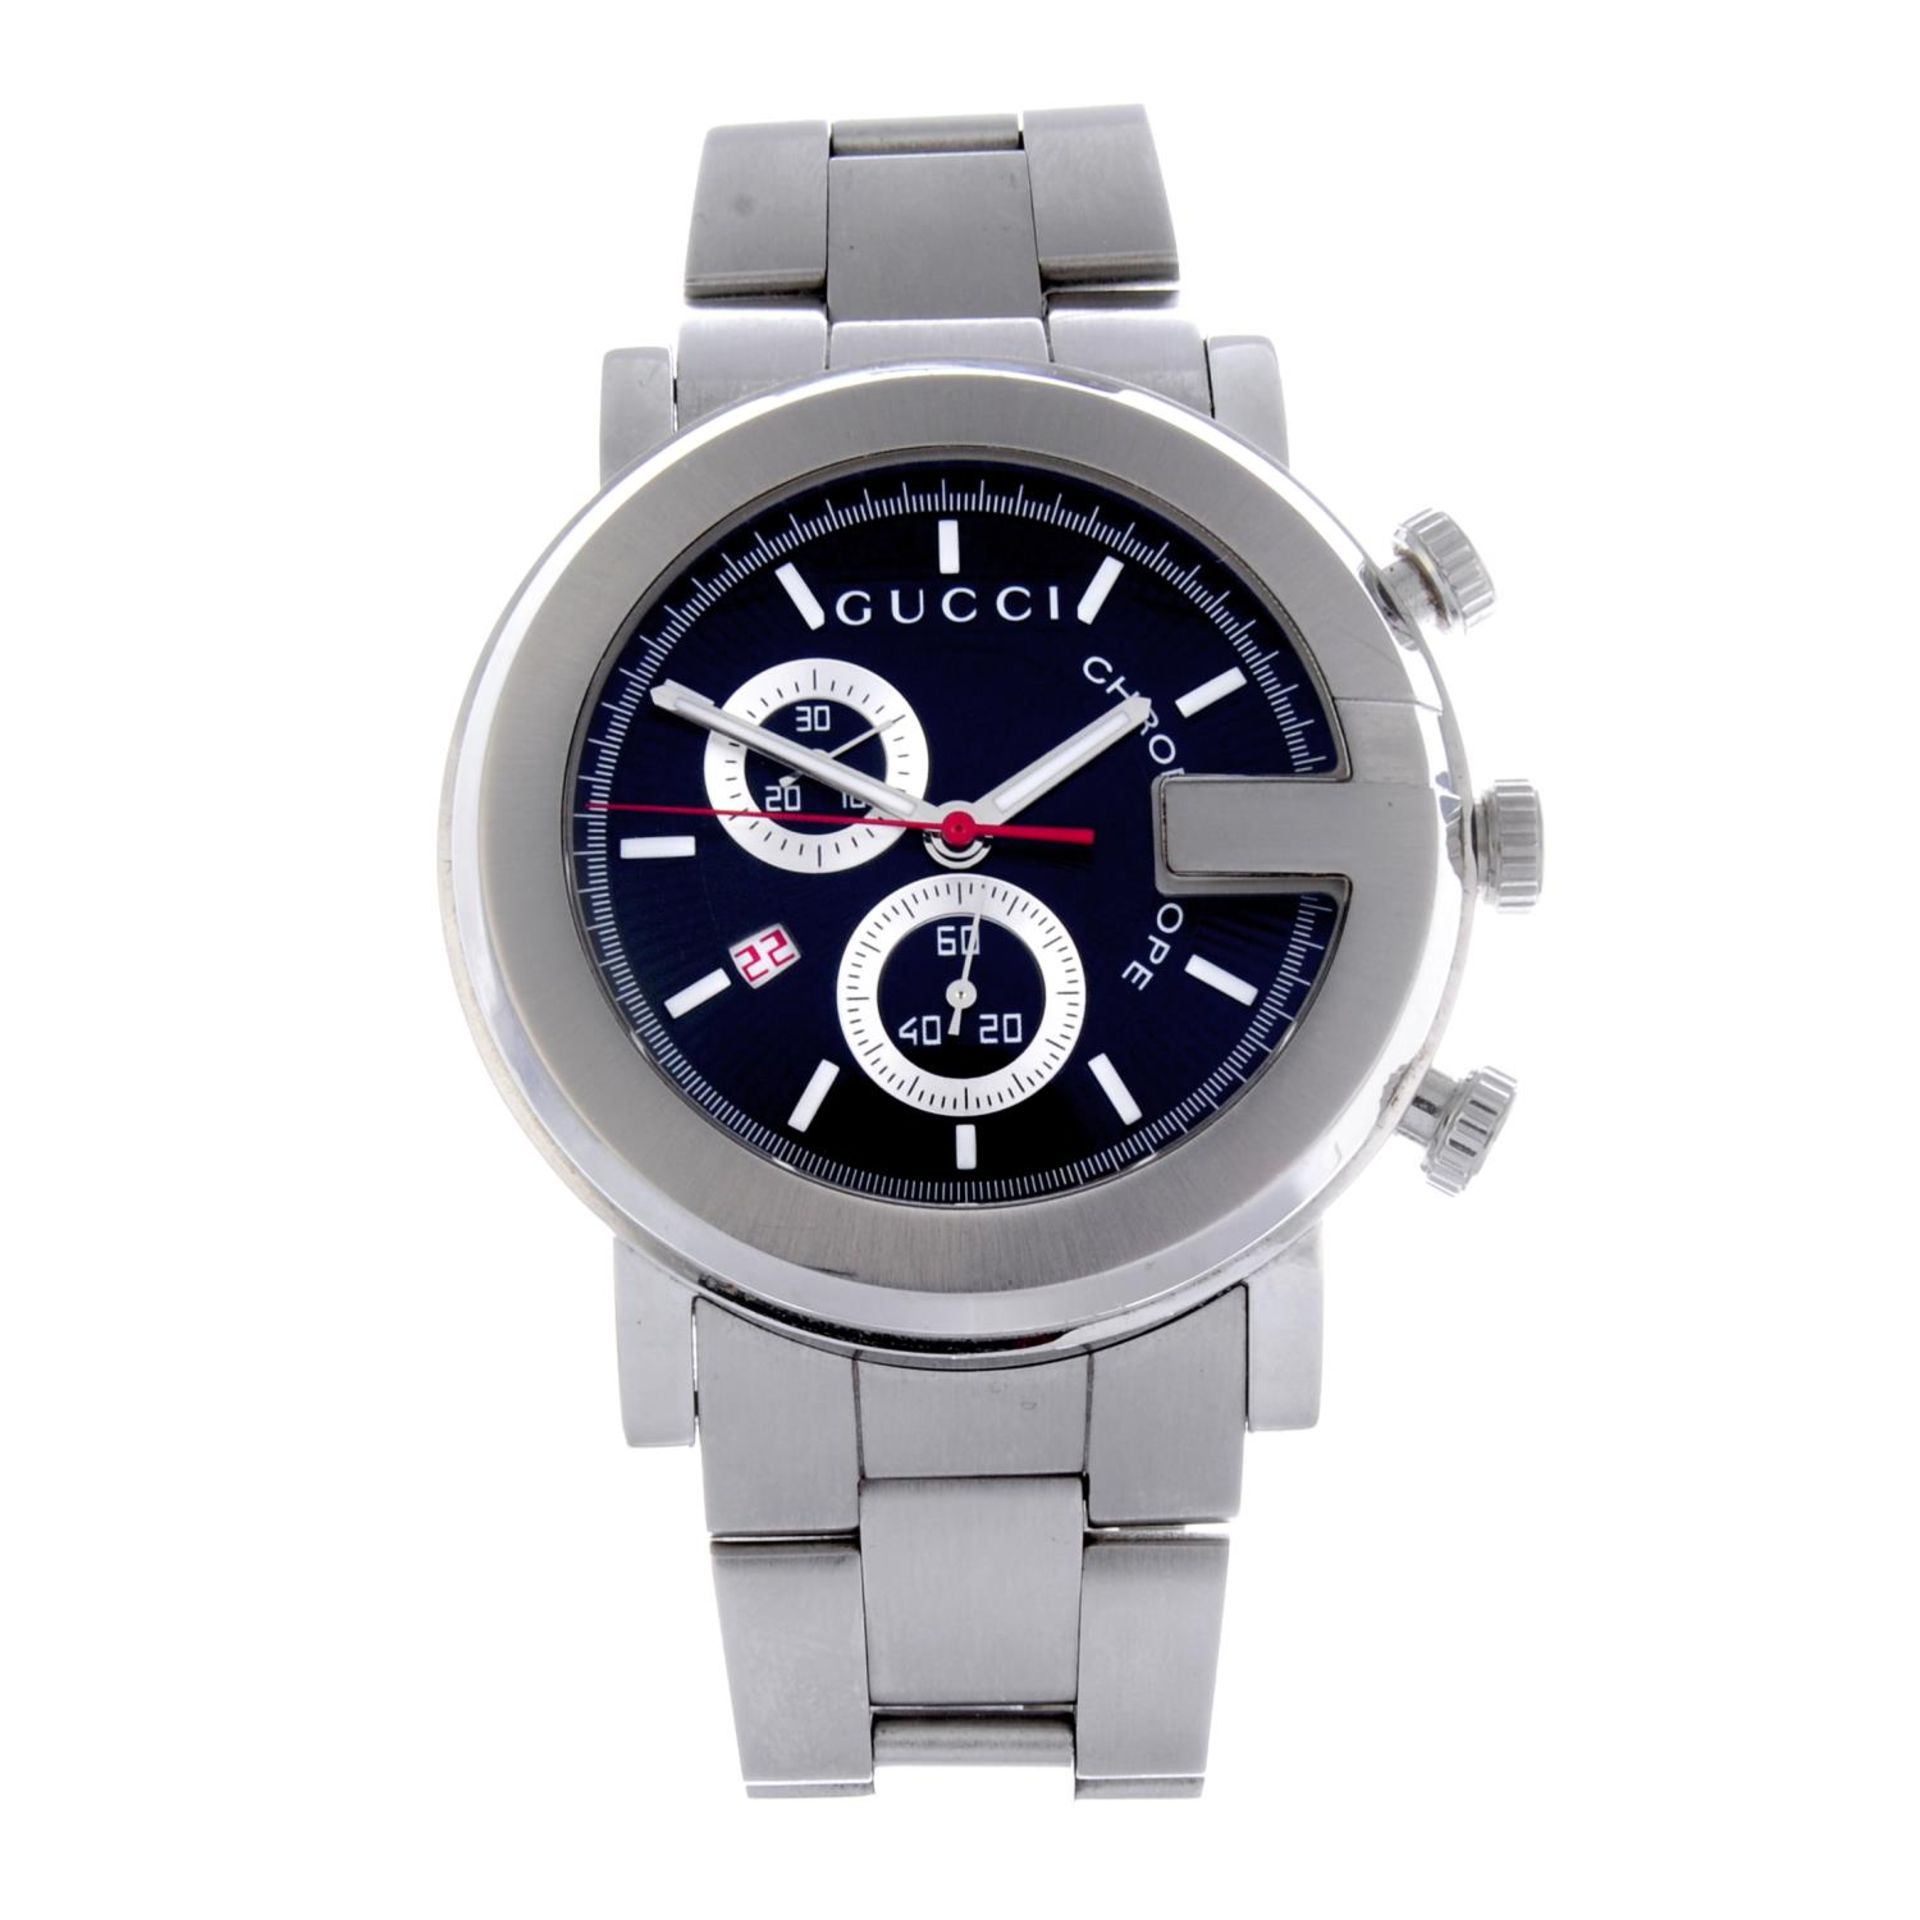 GUCCI - a gentleman's Chronoscope chronograph bracelet watch.